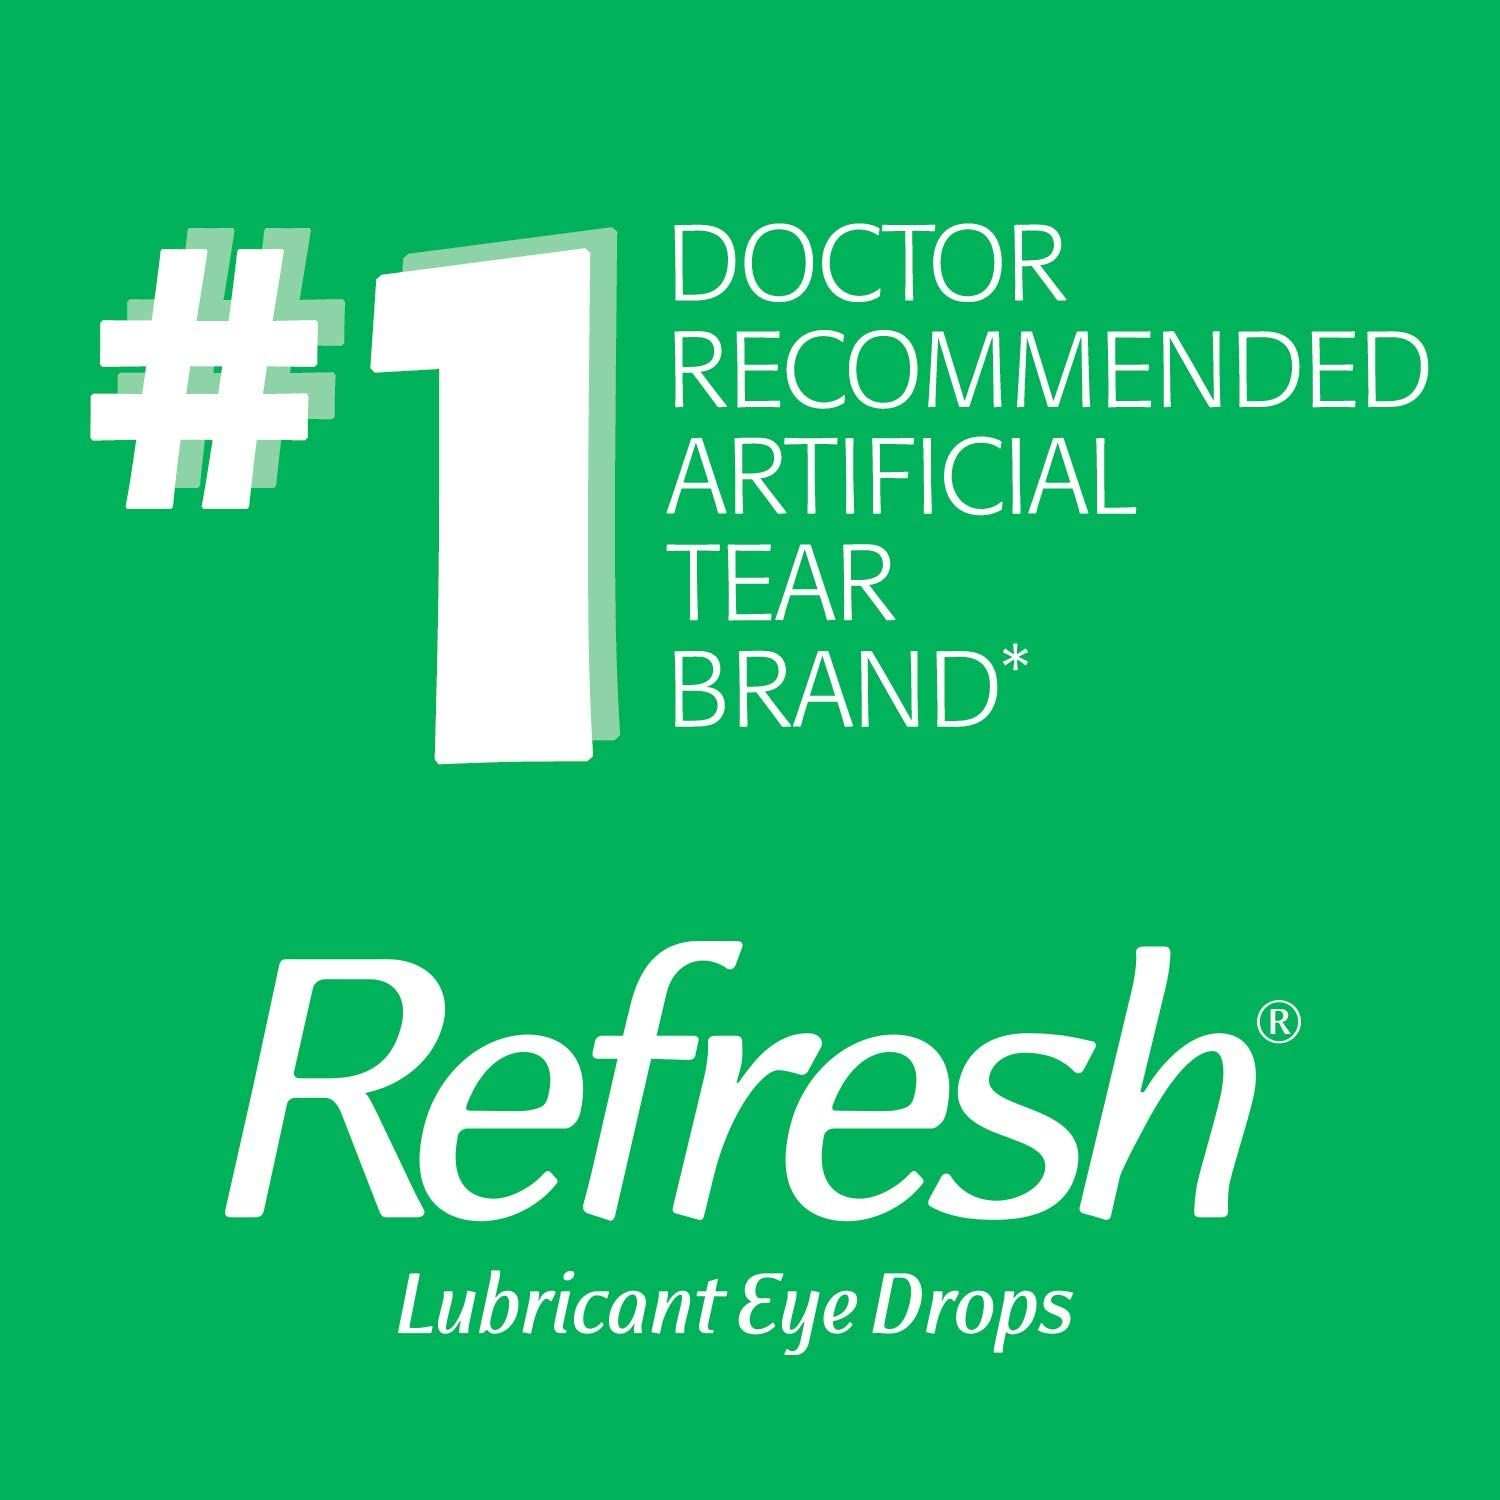 Refresh Preservative-Free Eye Drops - 50 ct